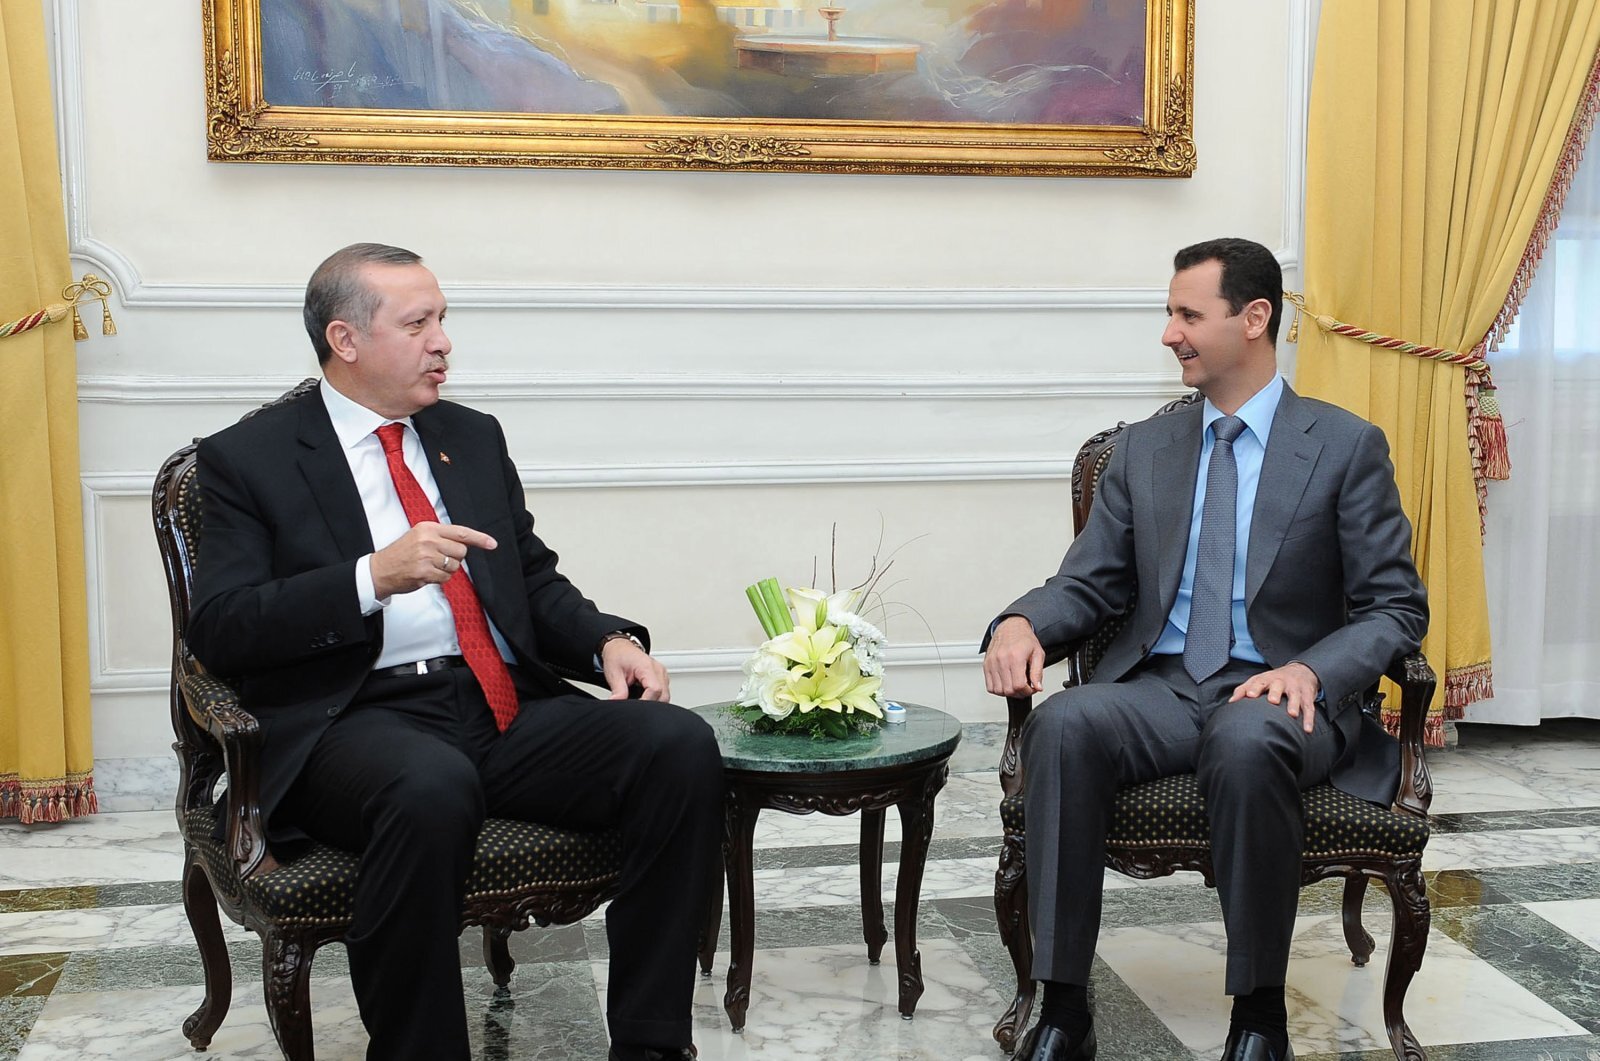 President Erdogan may meet Syria's leader Assad in Astana: Turkish Columnist